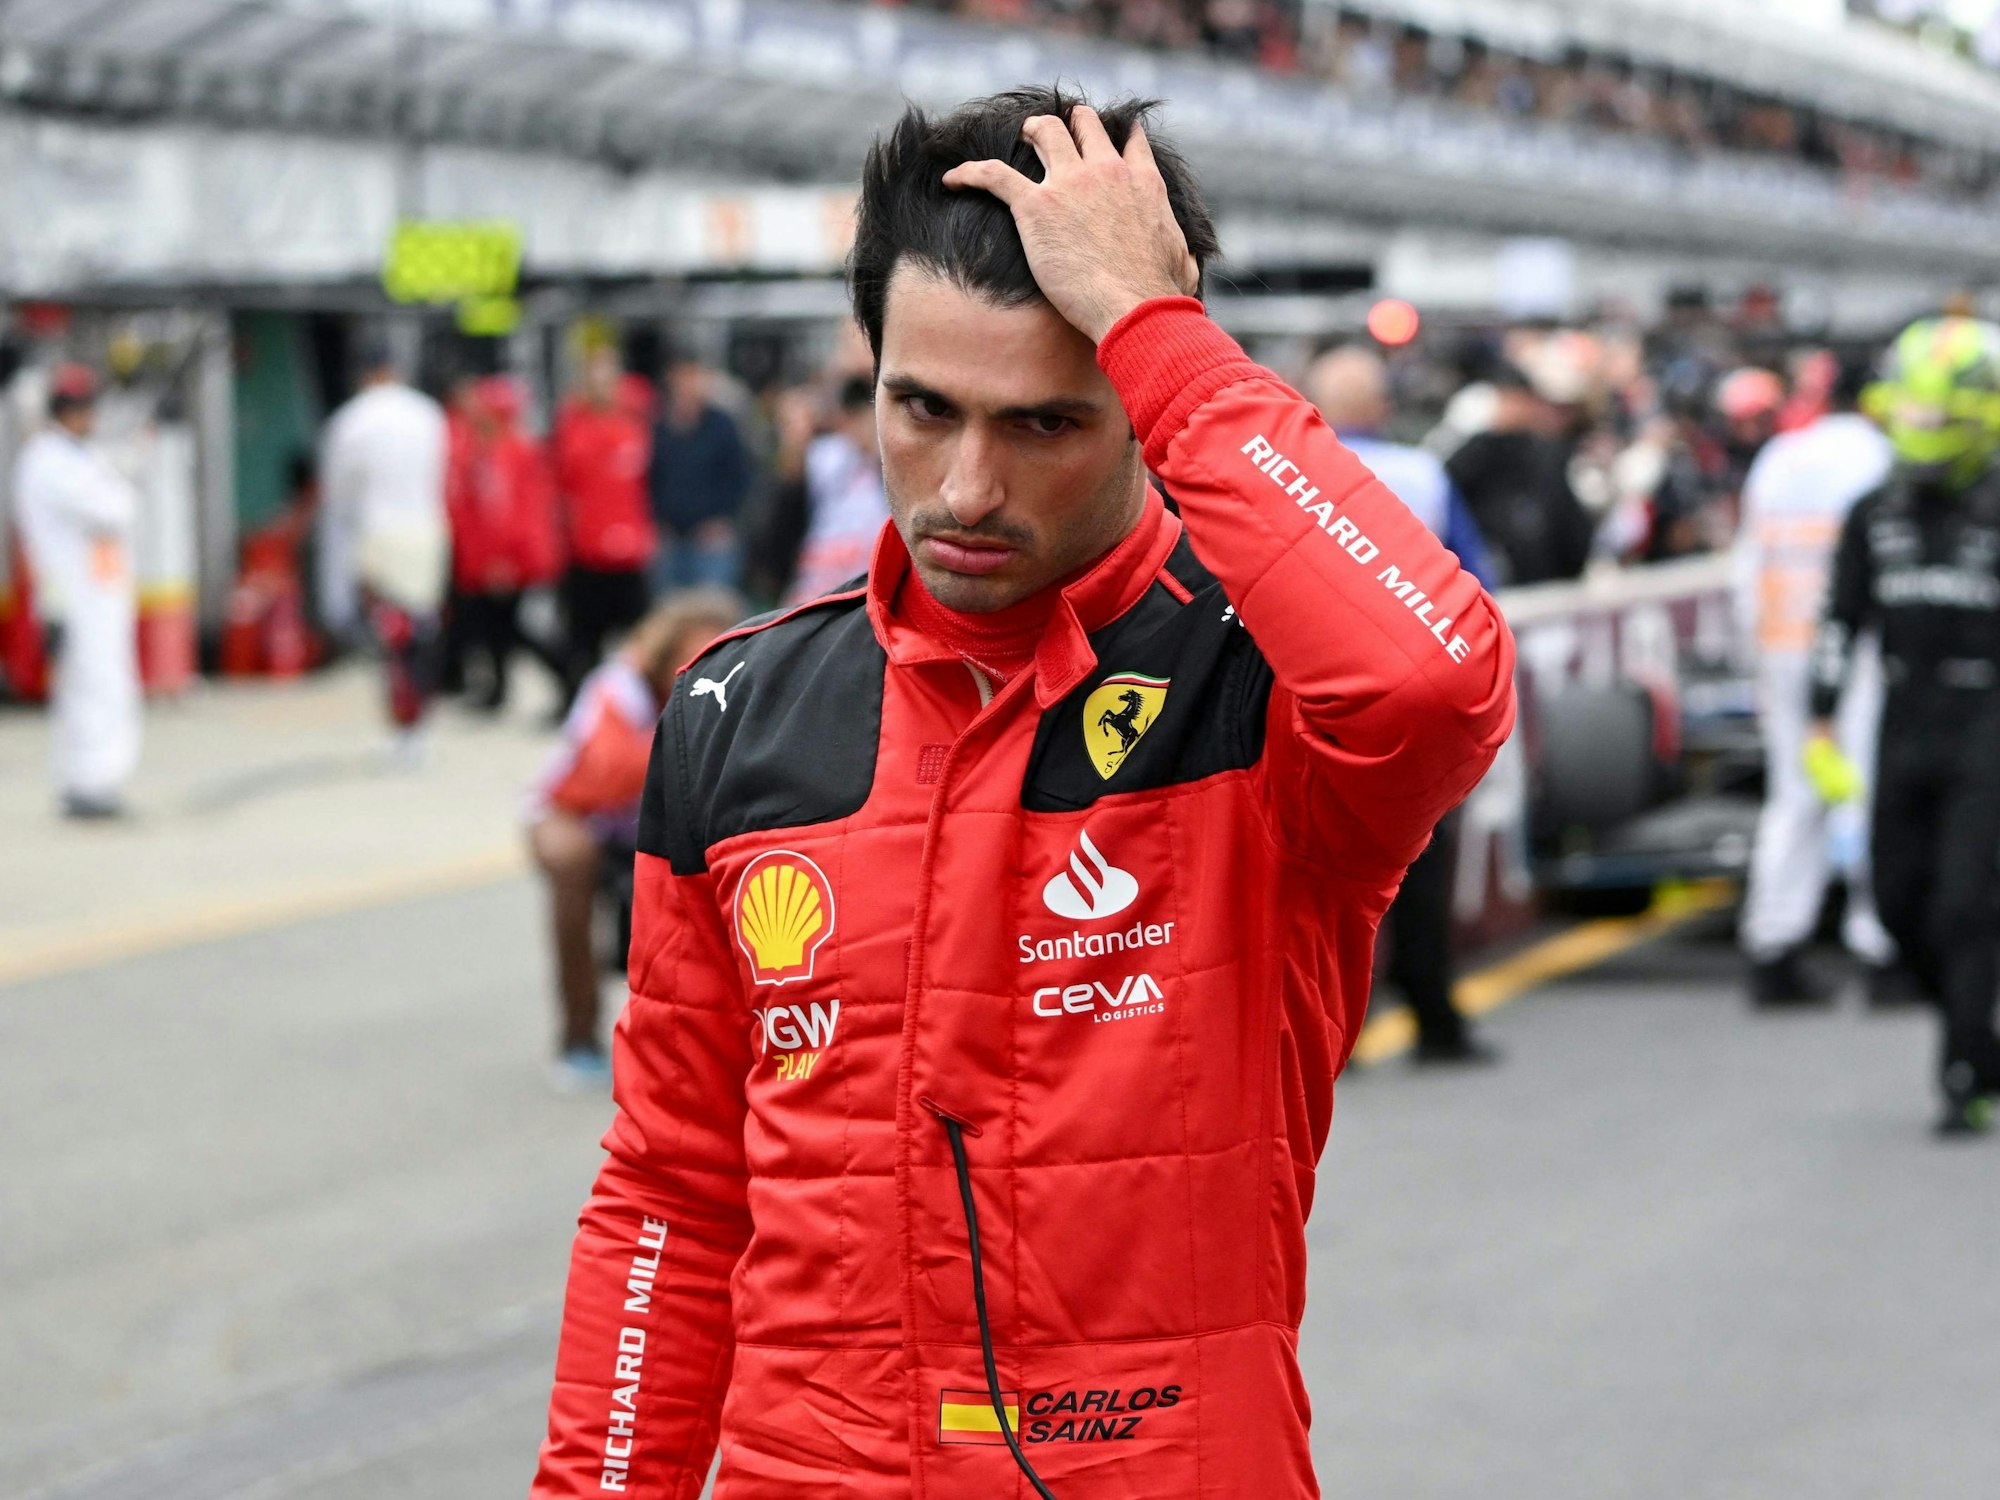 Ferrari-Pilot Carlos Sainz Jr streicht sich durchs Haar.